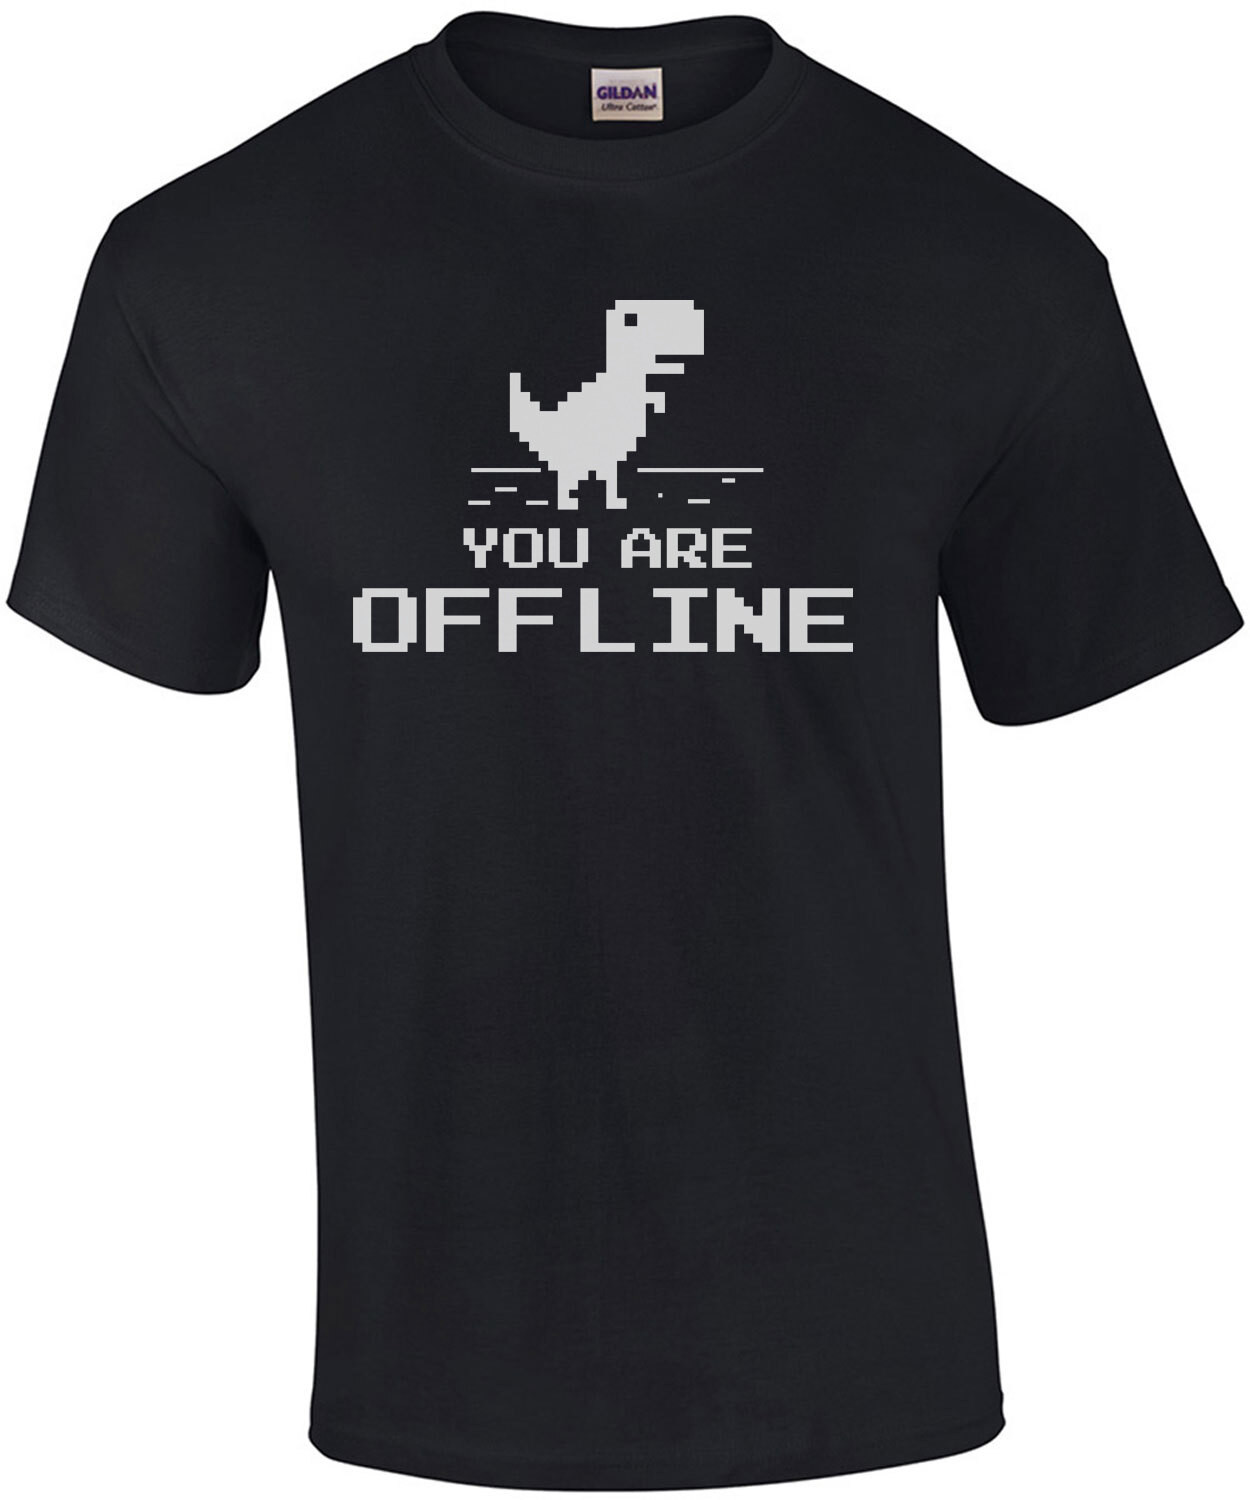 You are offline - dinosaur t-shirt